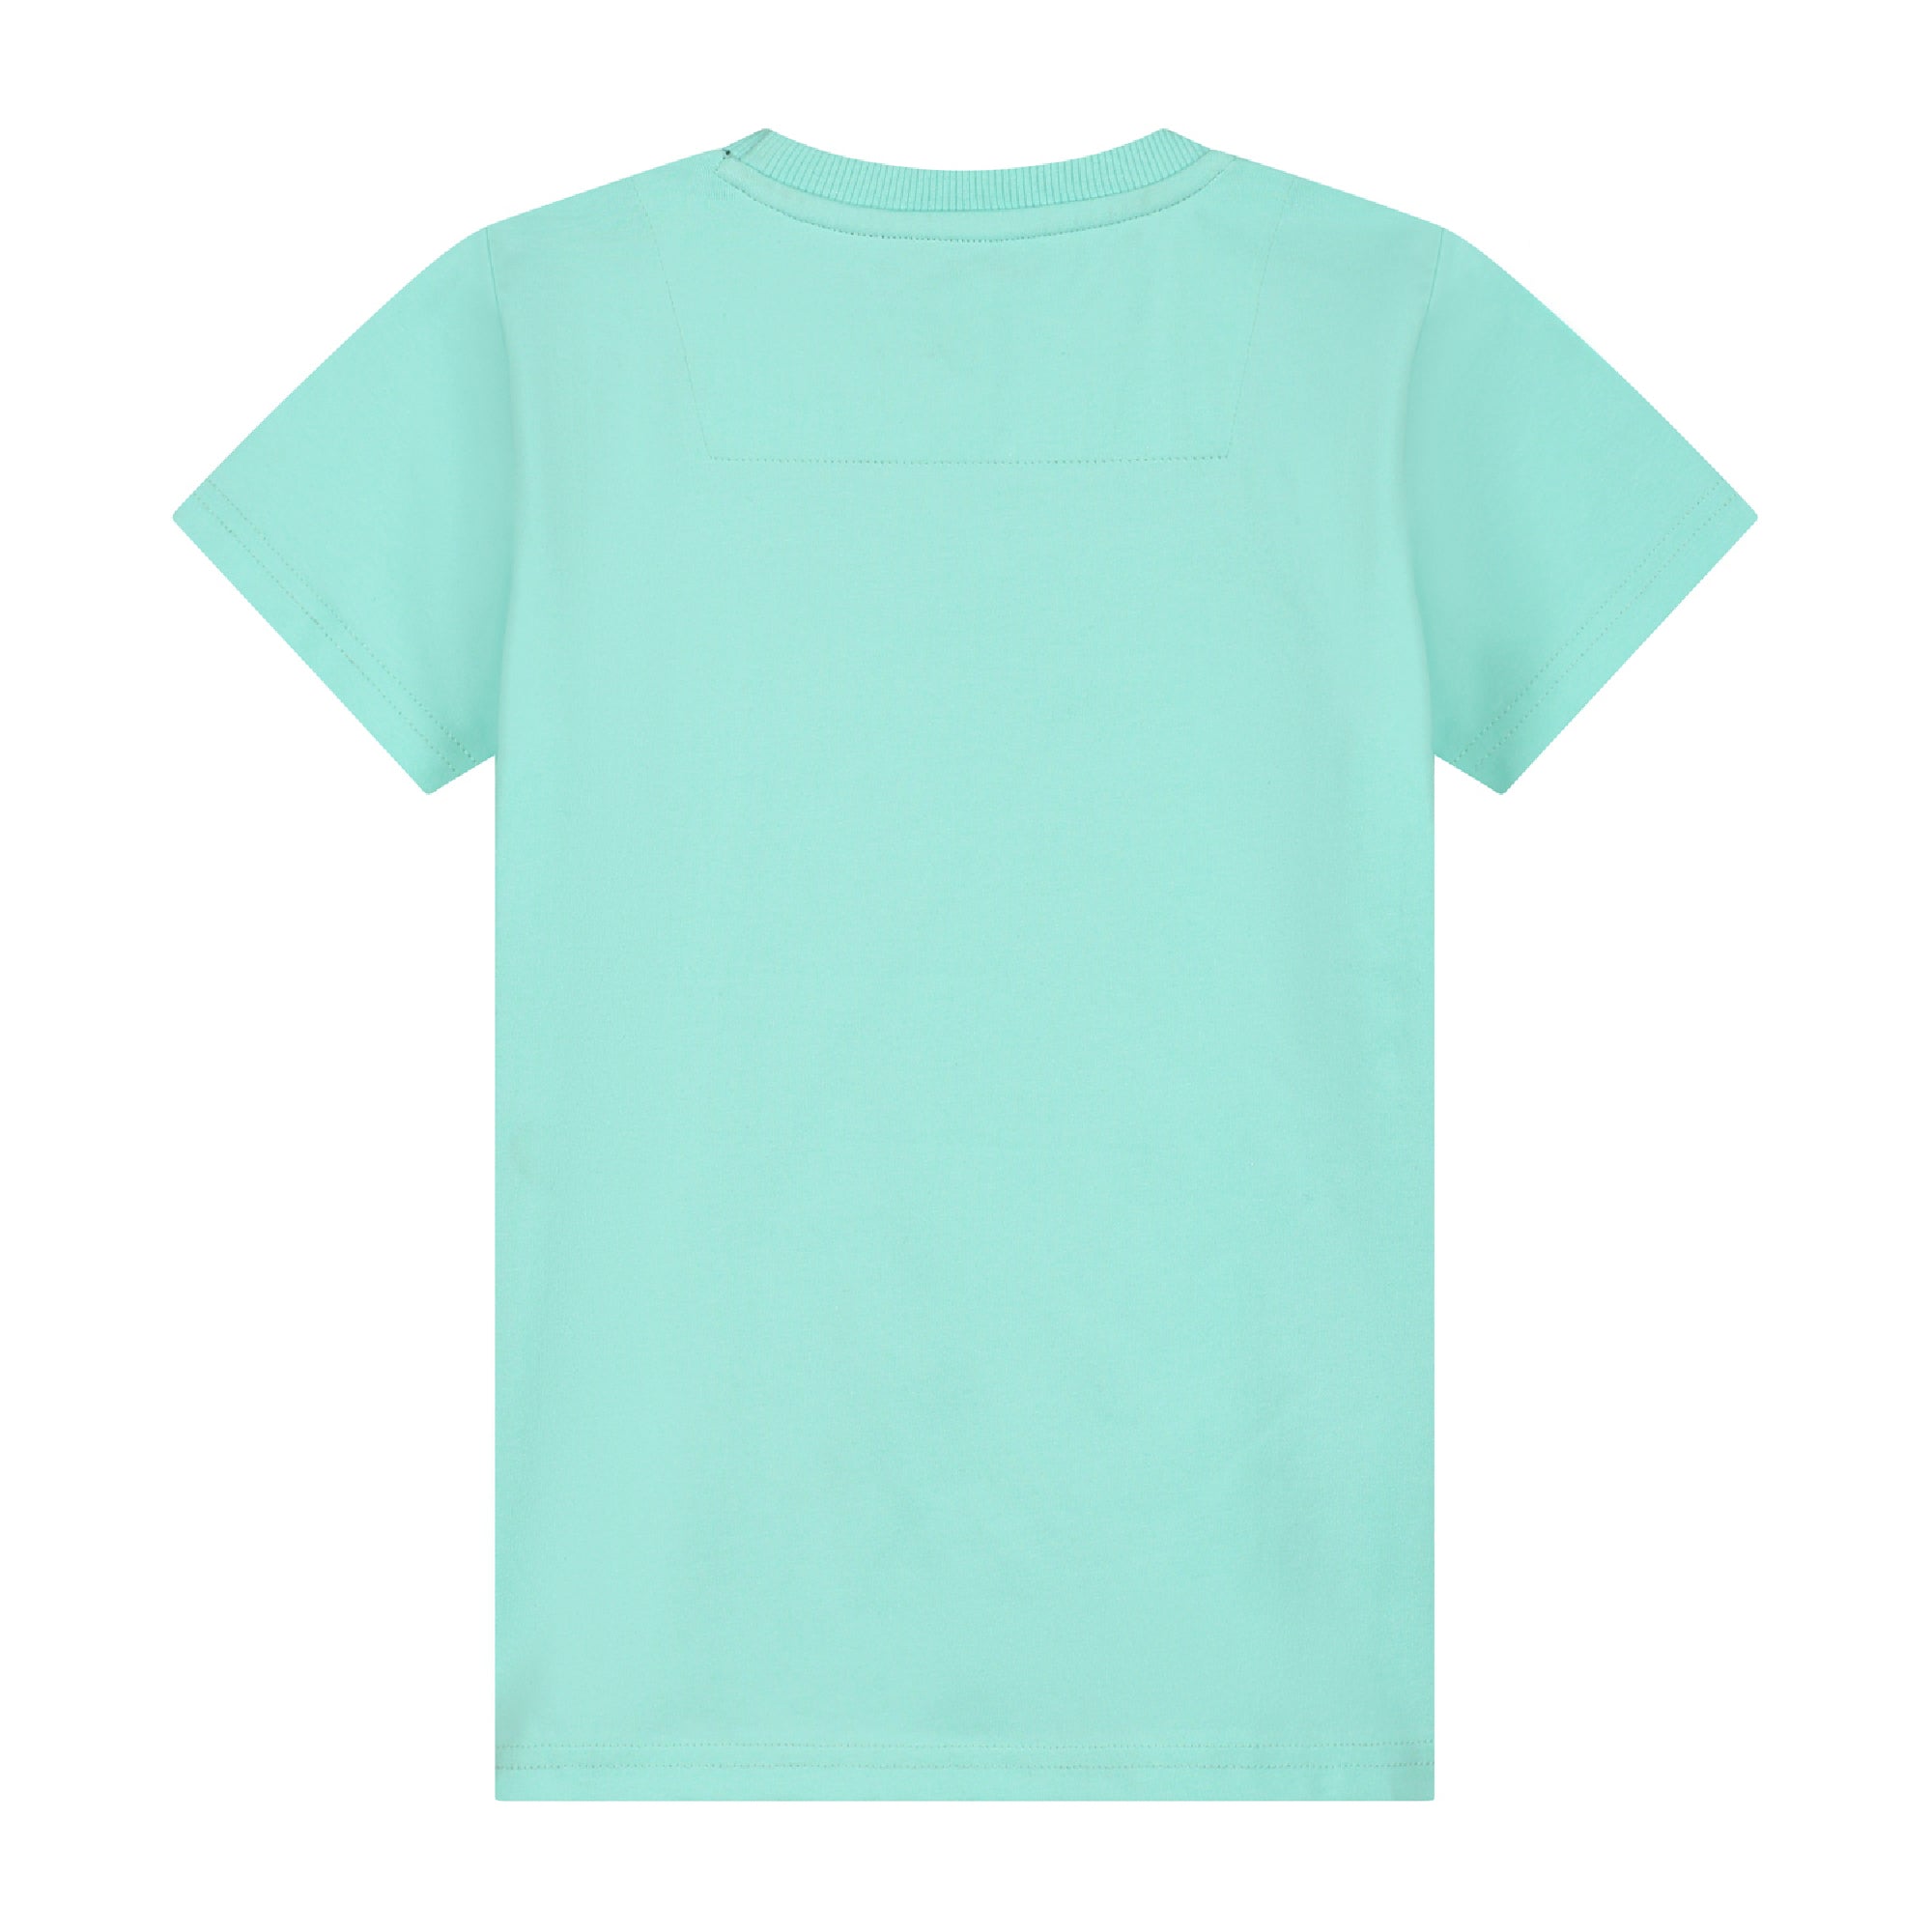 Skurk T-shirt Tiam Light Blue